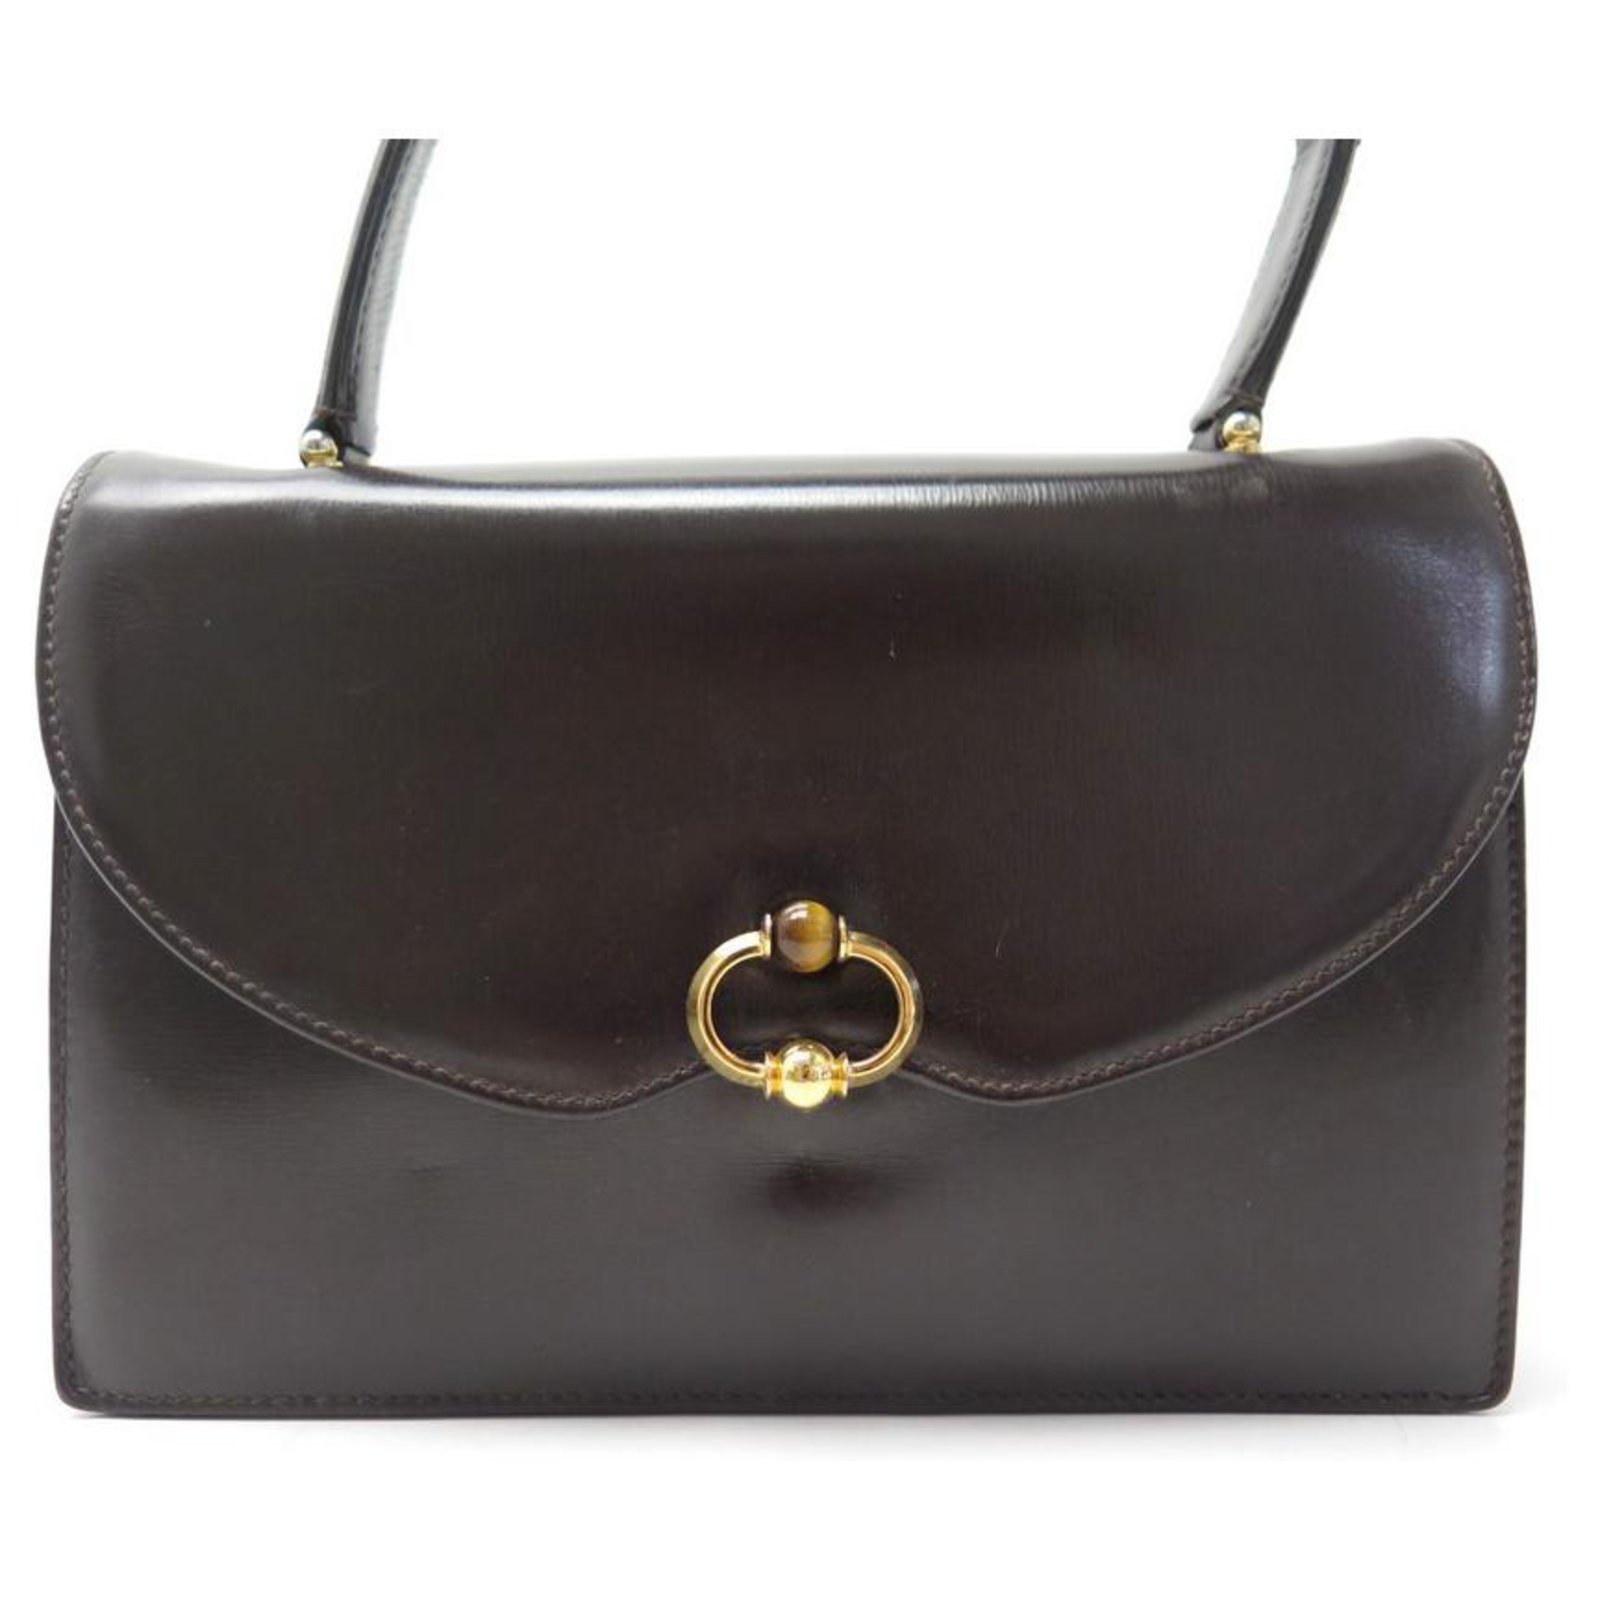 Vintage Gucci Handbag in Brown Leather 1950s -  Israel